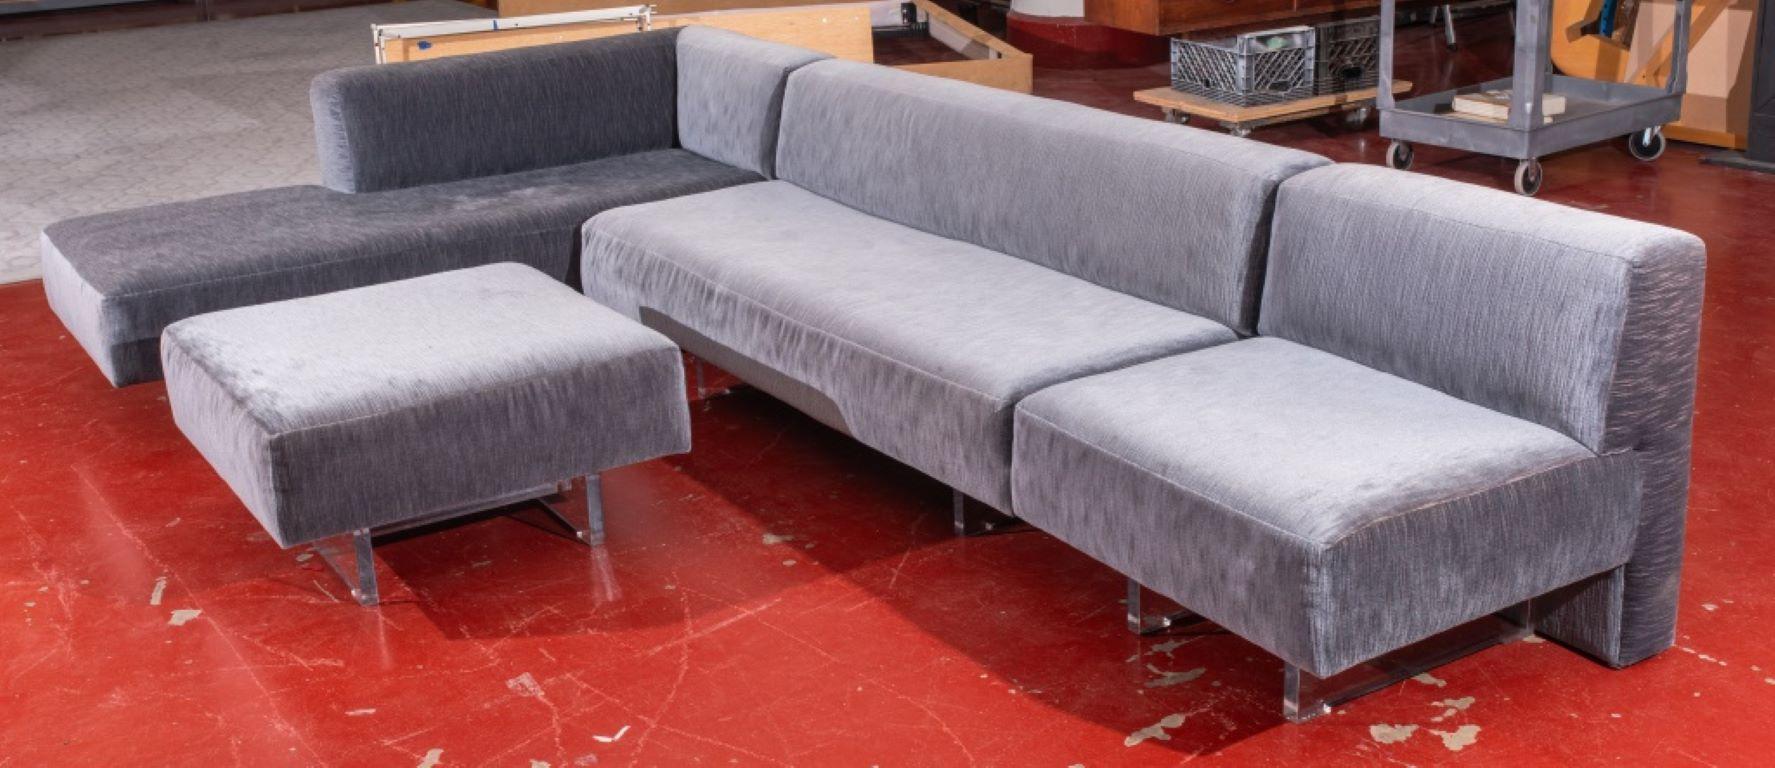 Fabric Vladimir Kagan Omnibus Four Piece Sectional Sofa For Sale